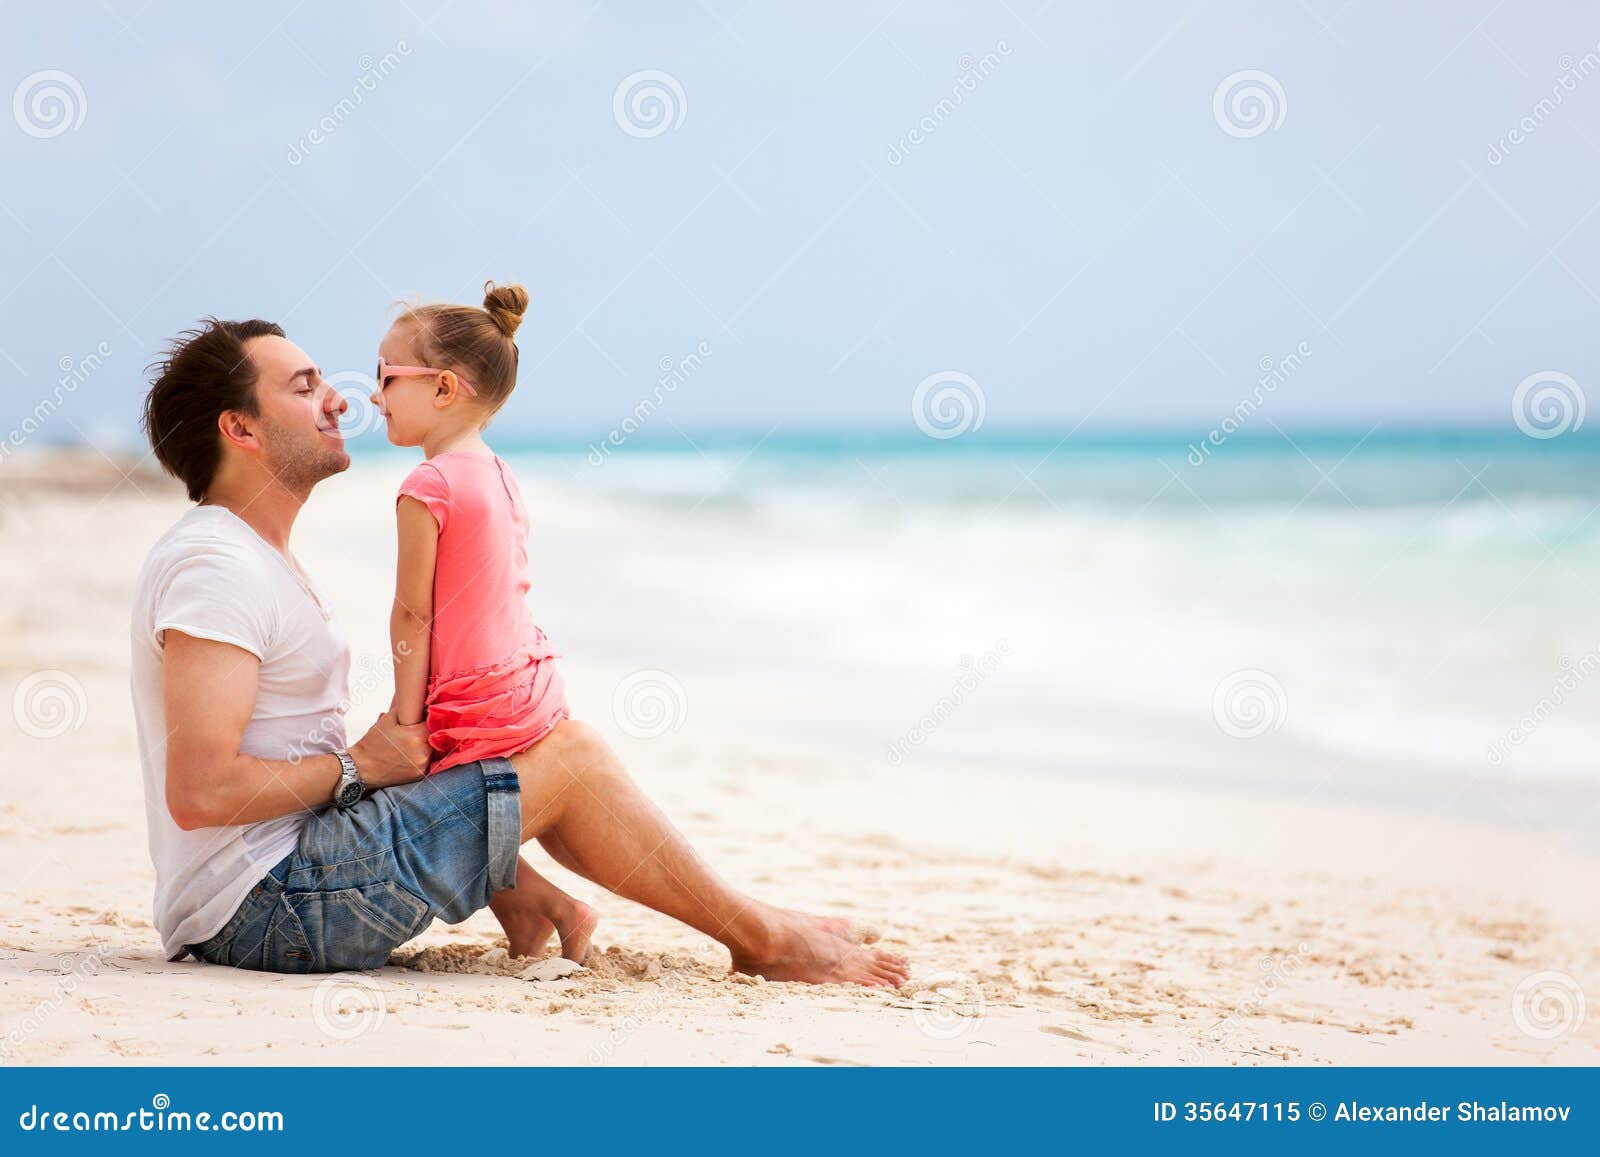 father-daughter-beach-portraits_212090_241.jpg